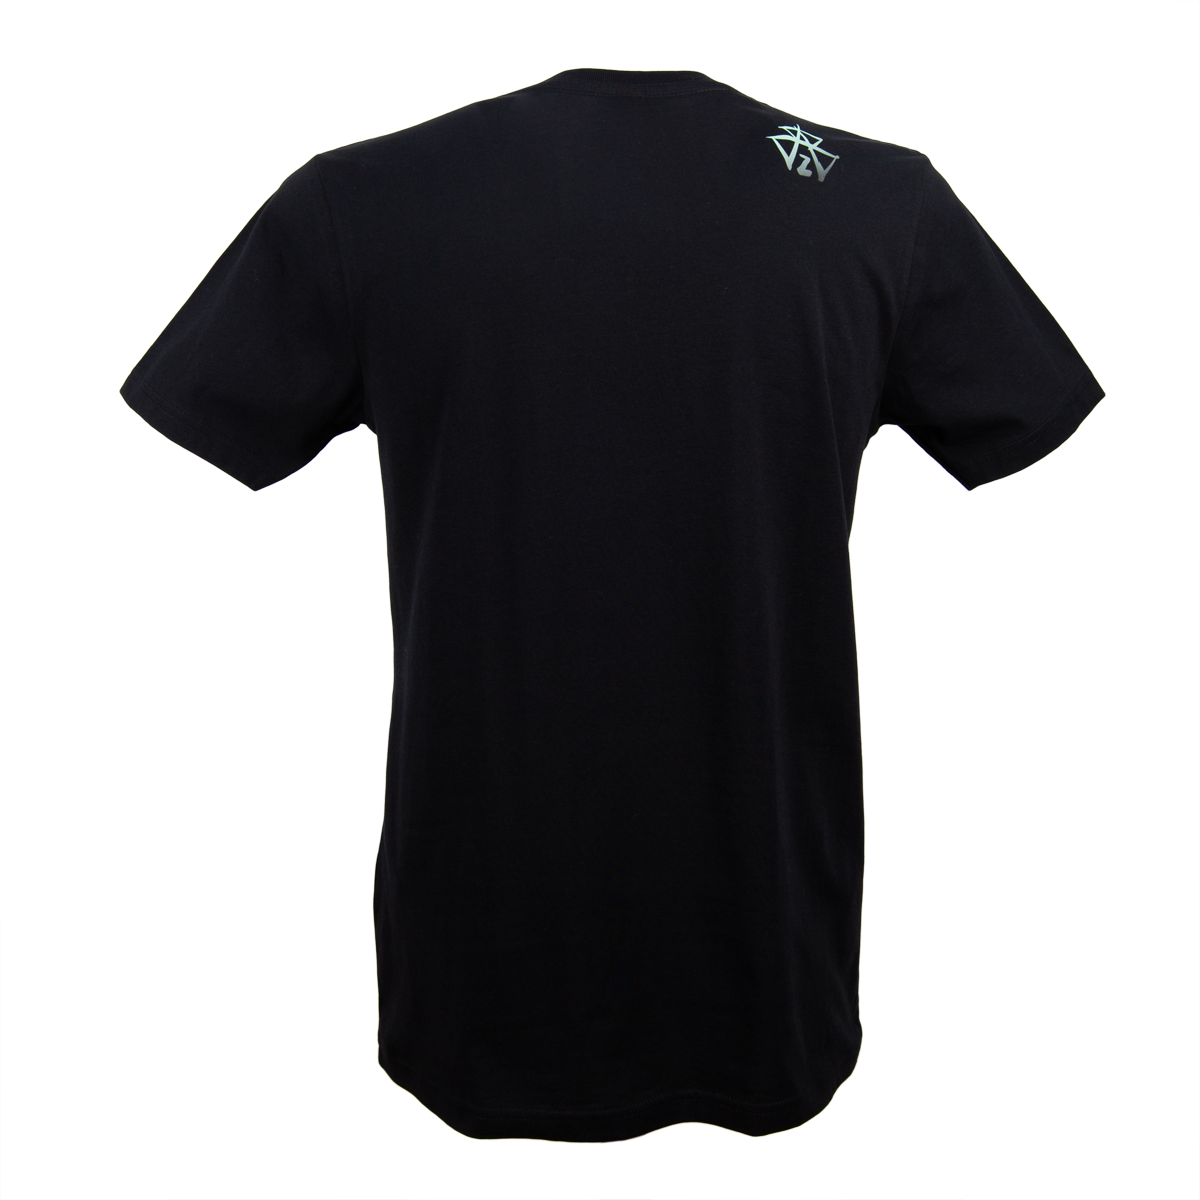 Pattern SCR T-Shirt